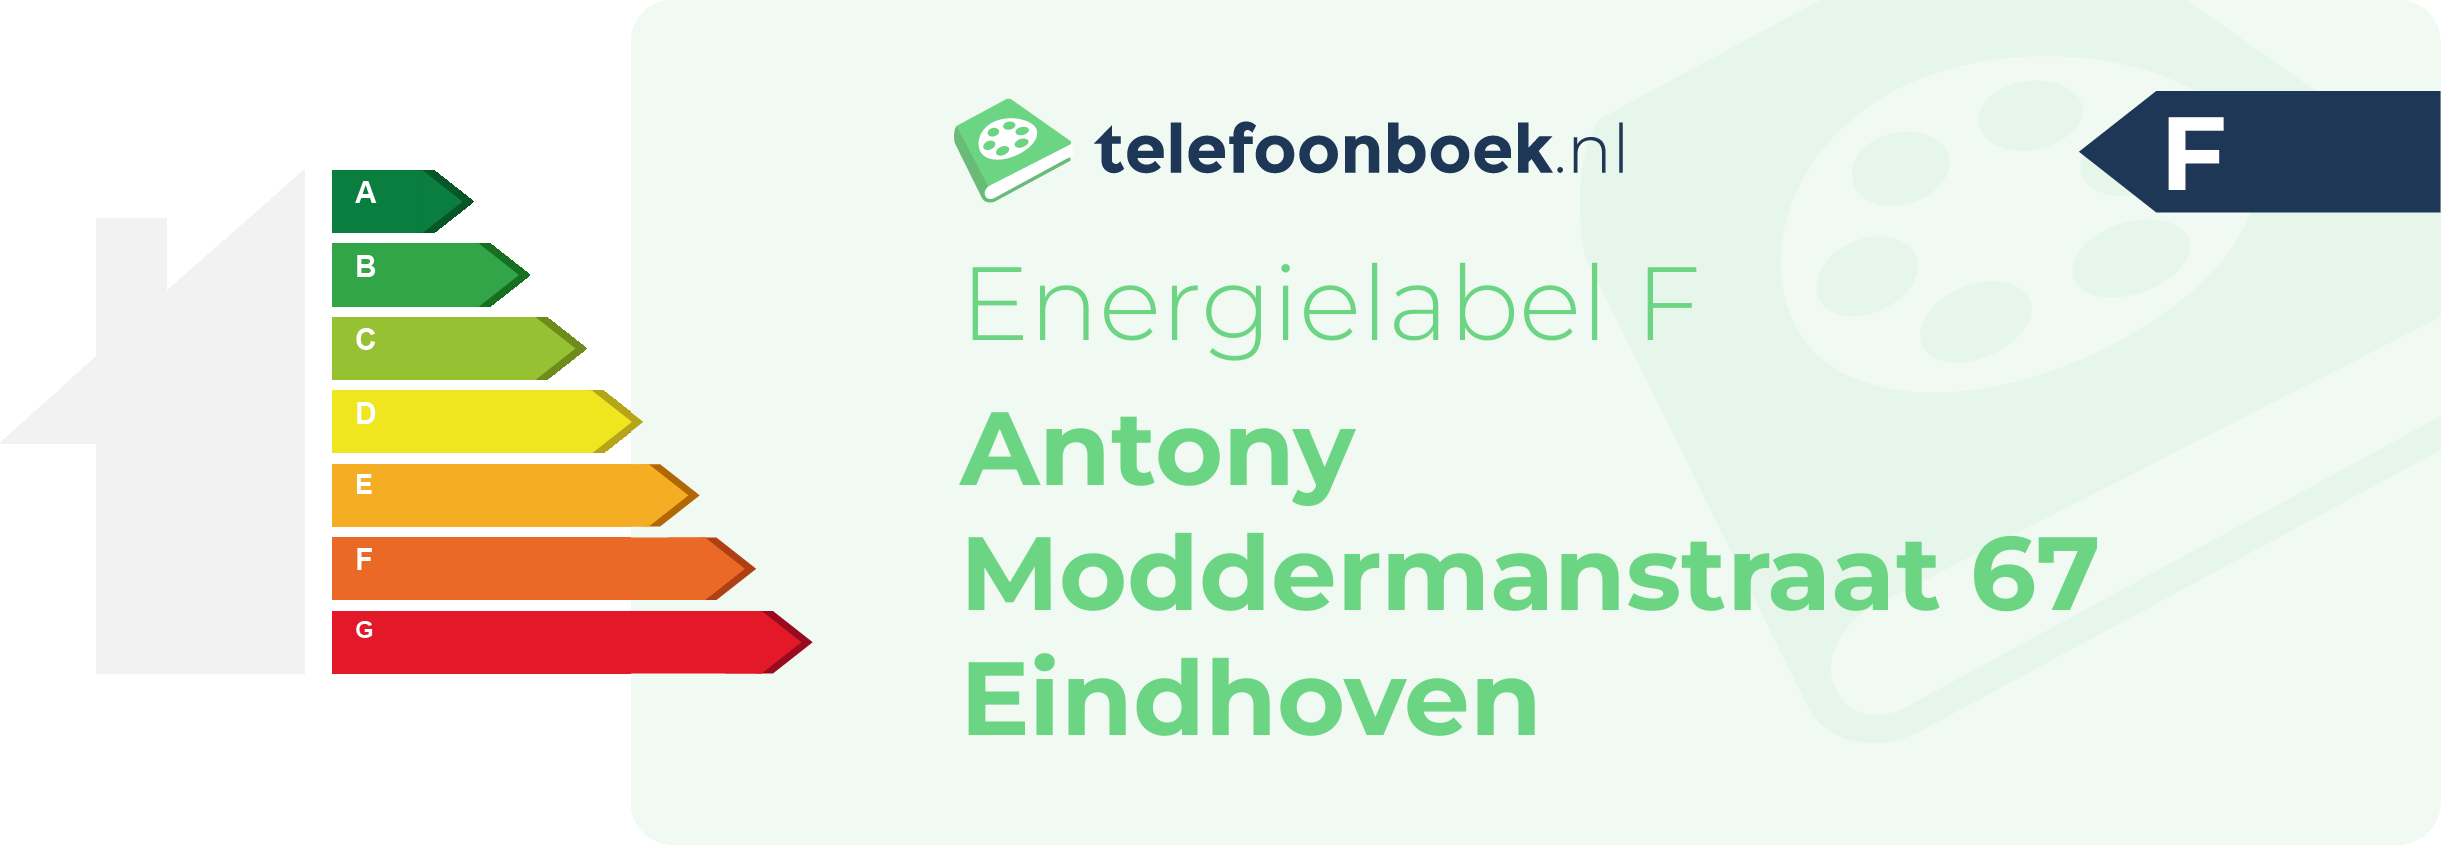 Energielabel Antony Moddermanstraat 67 Eindhoven